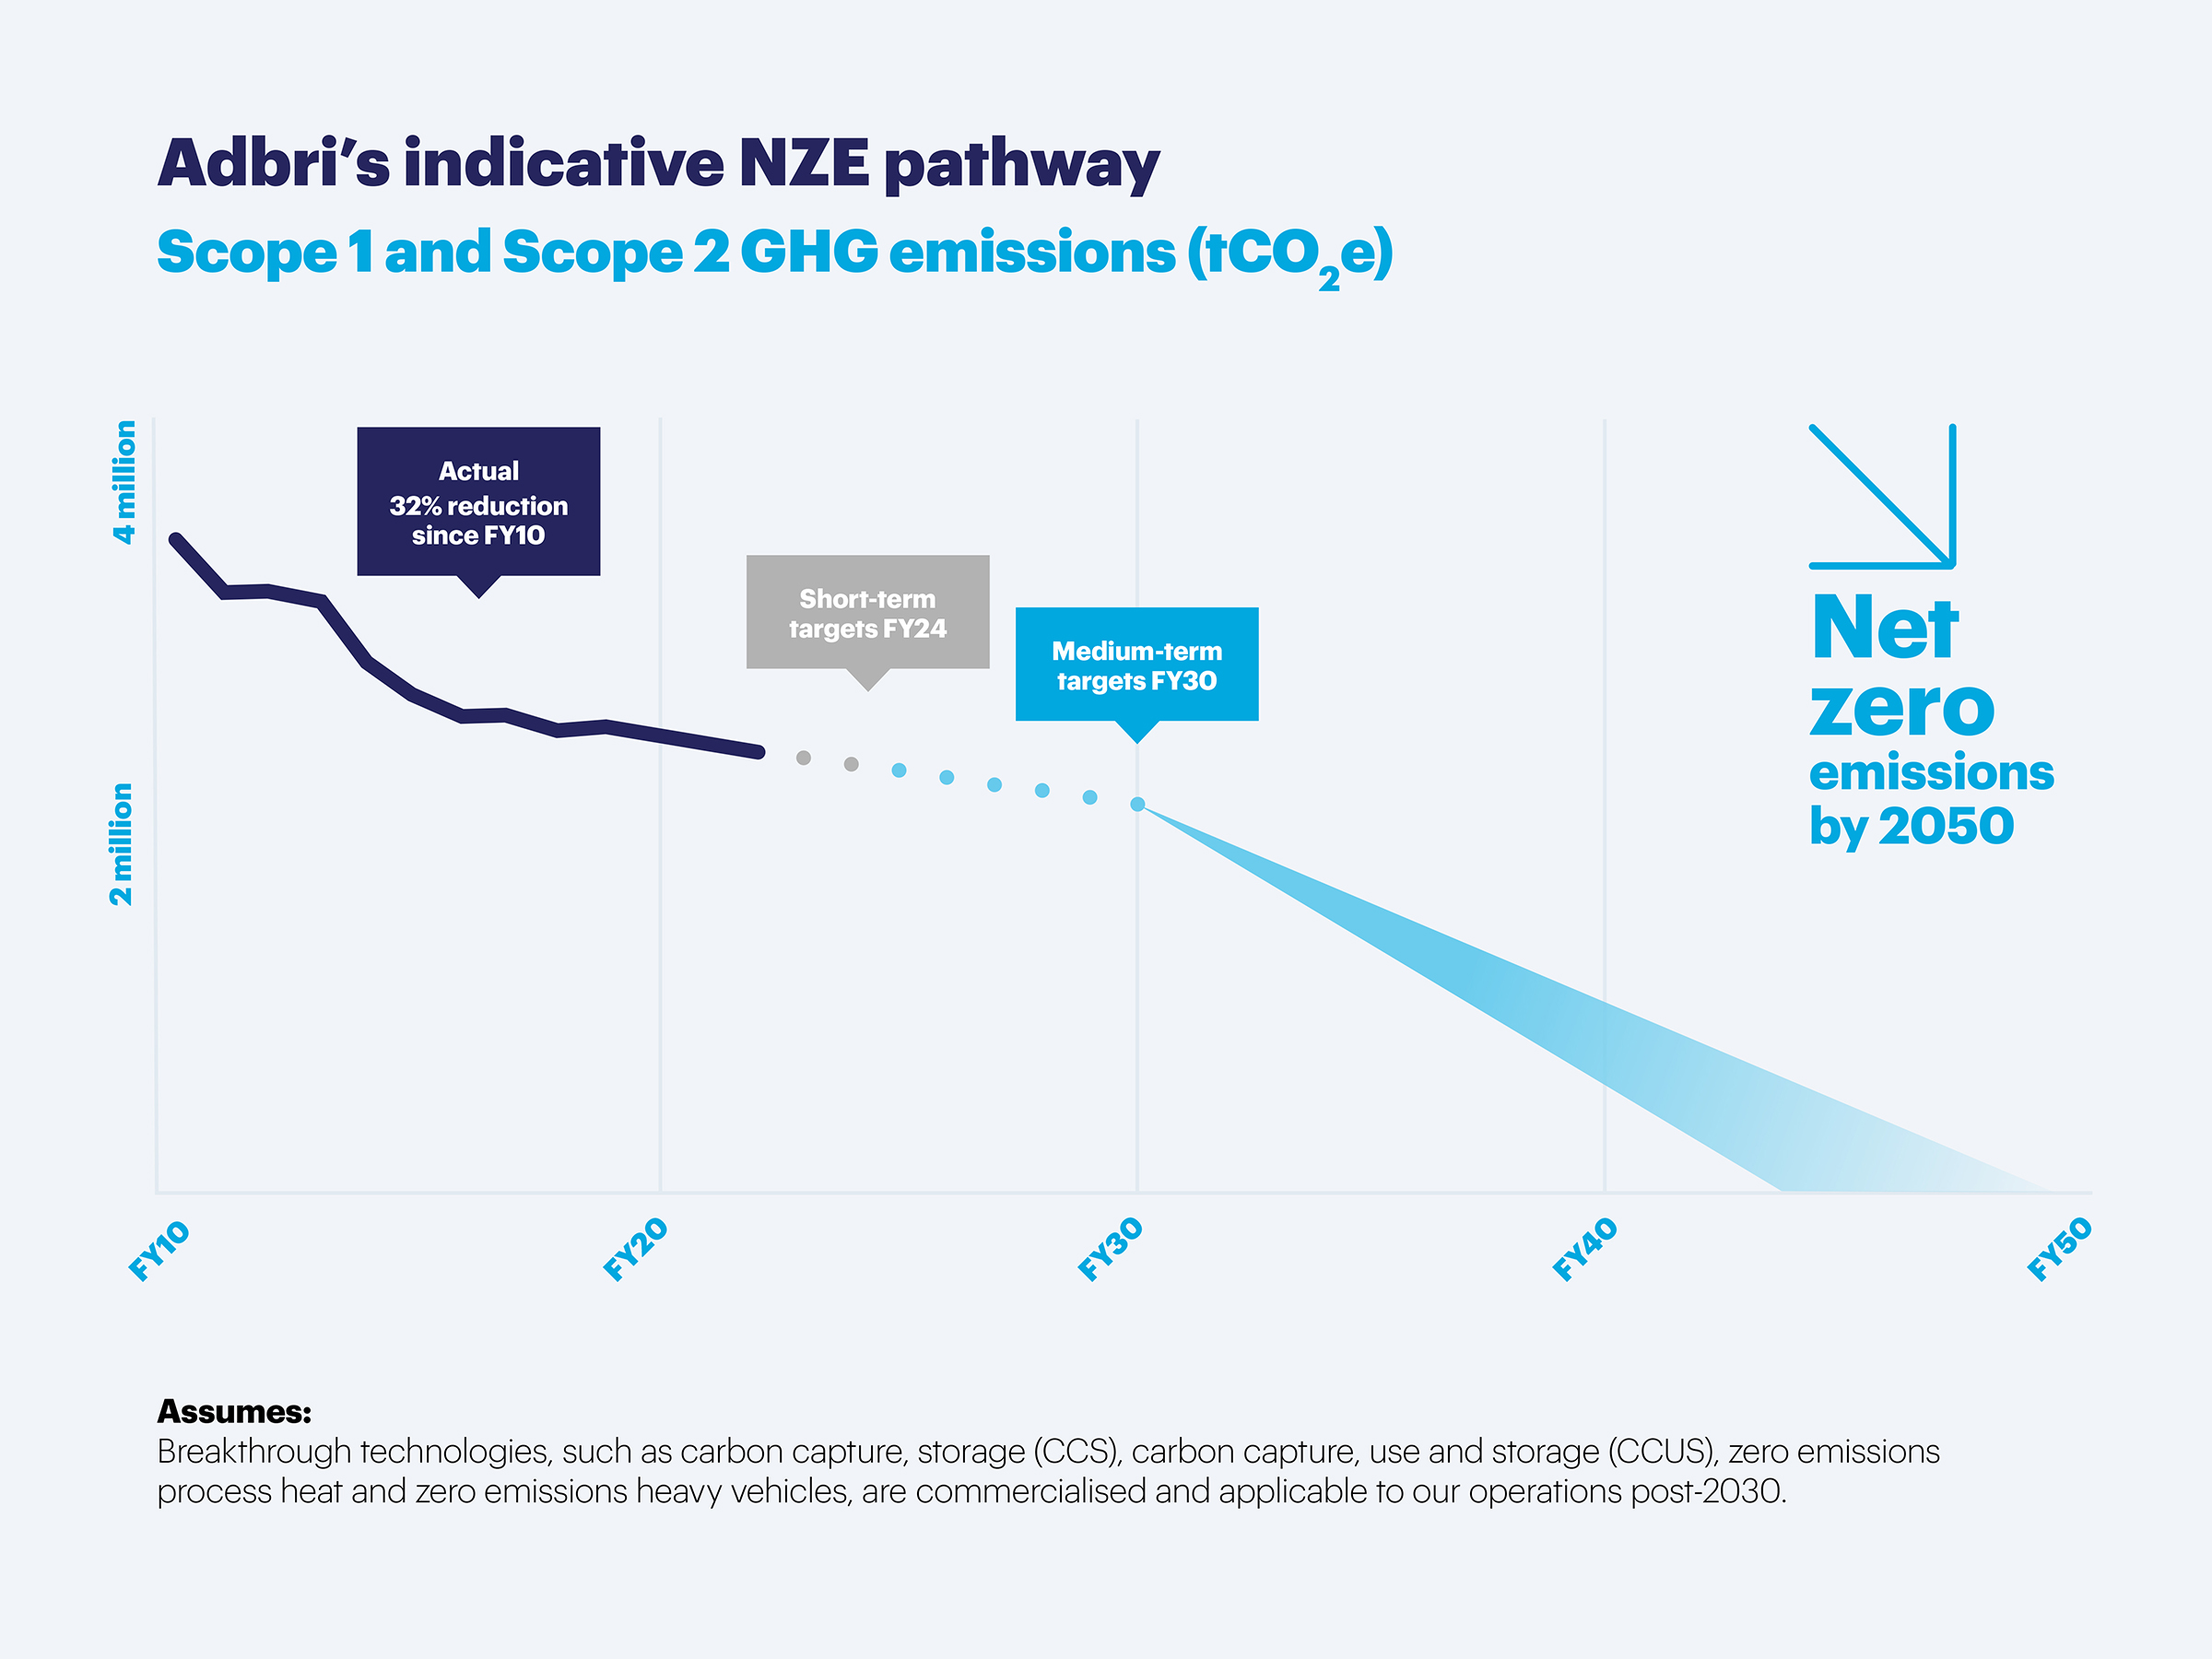 Our indicative pathway to net zero 